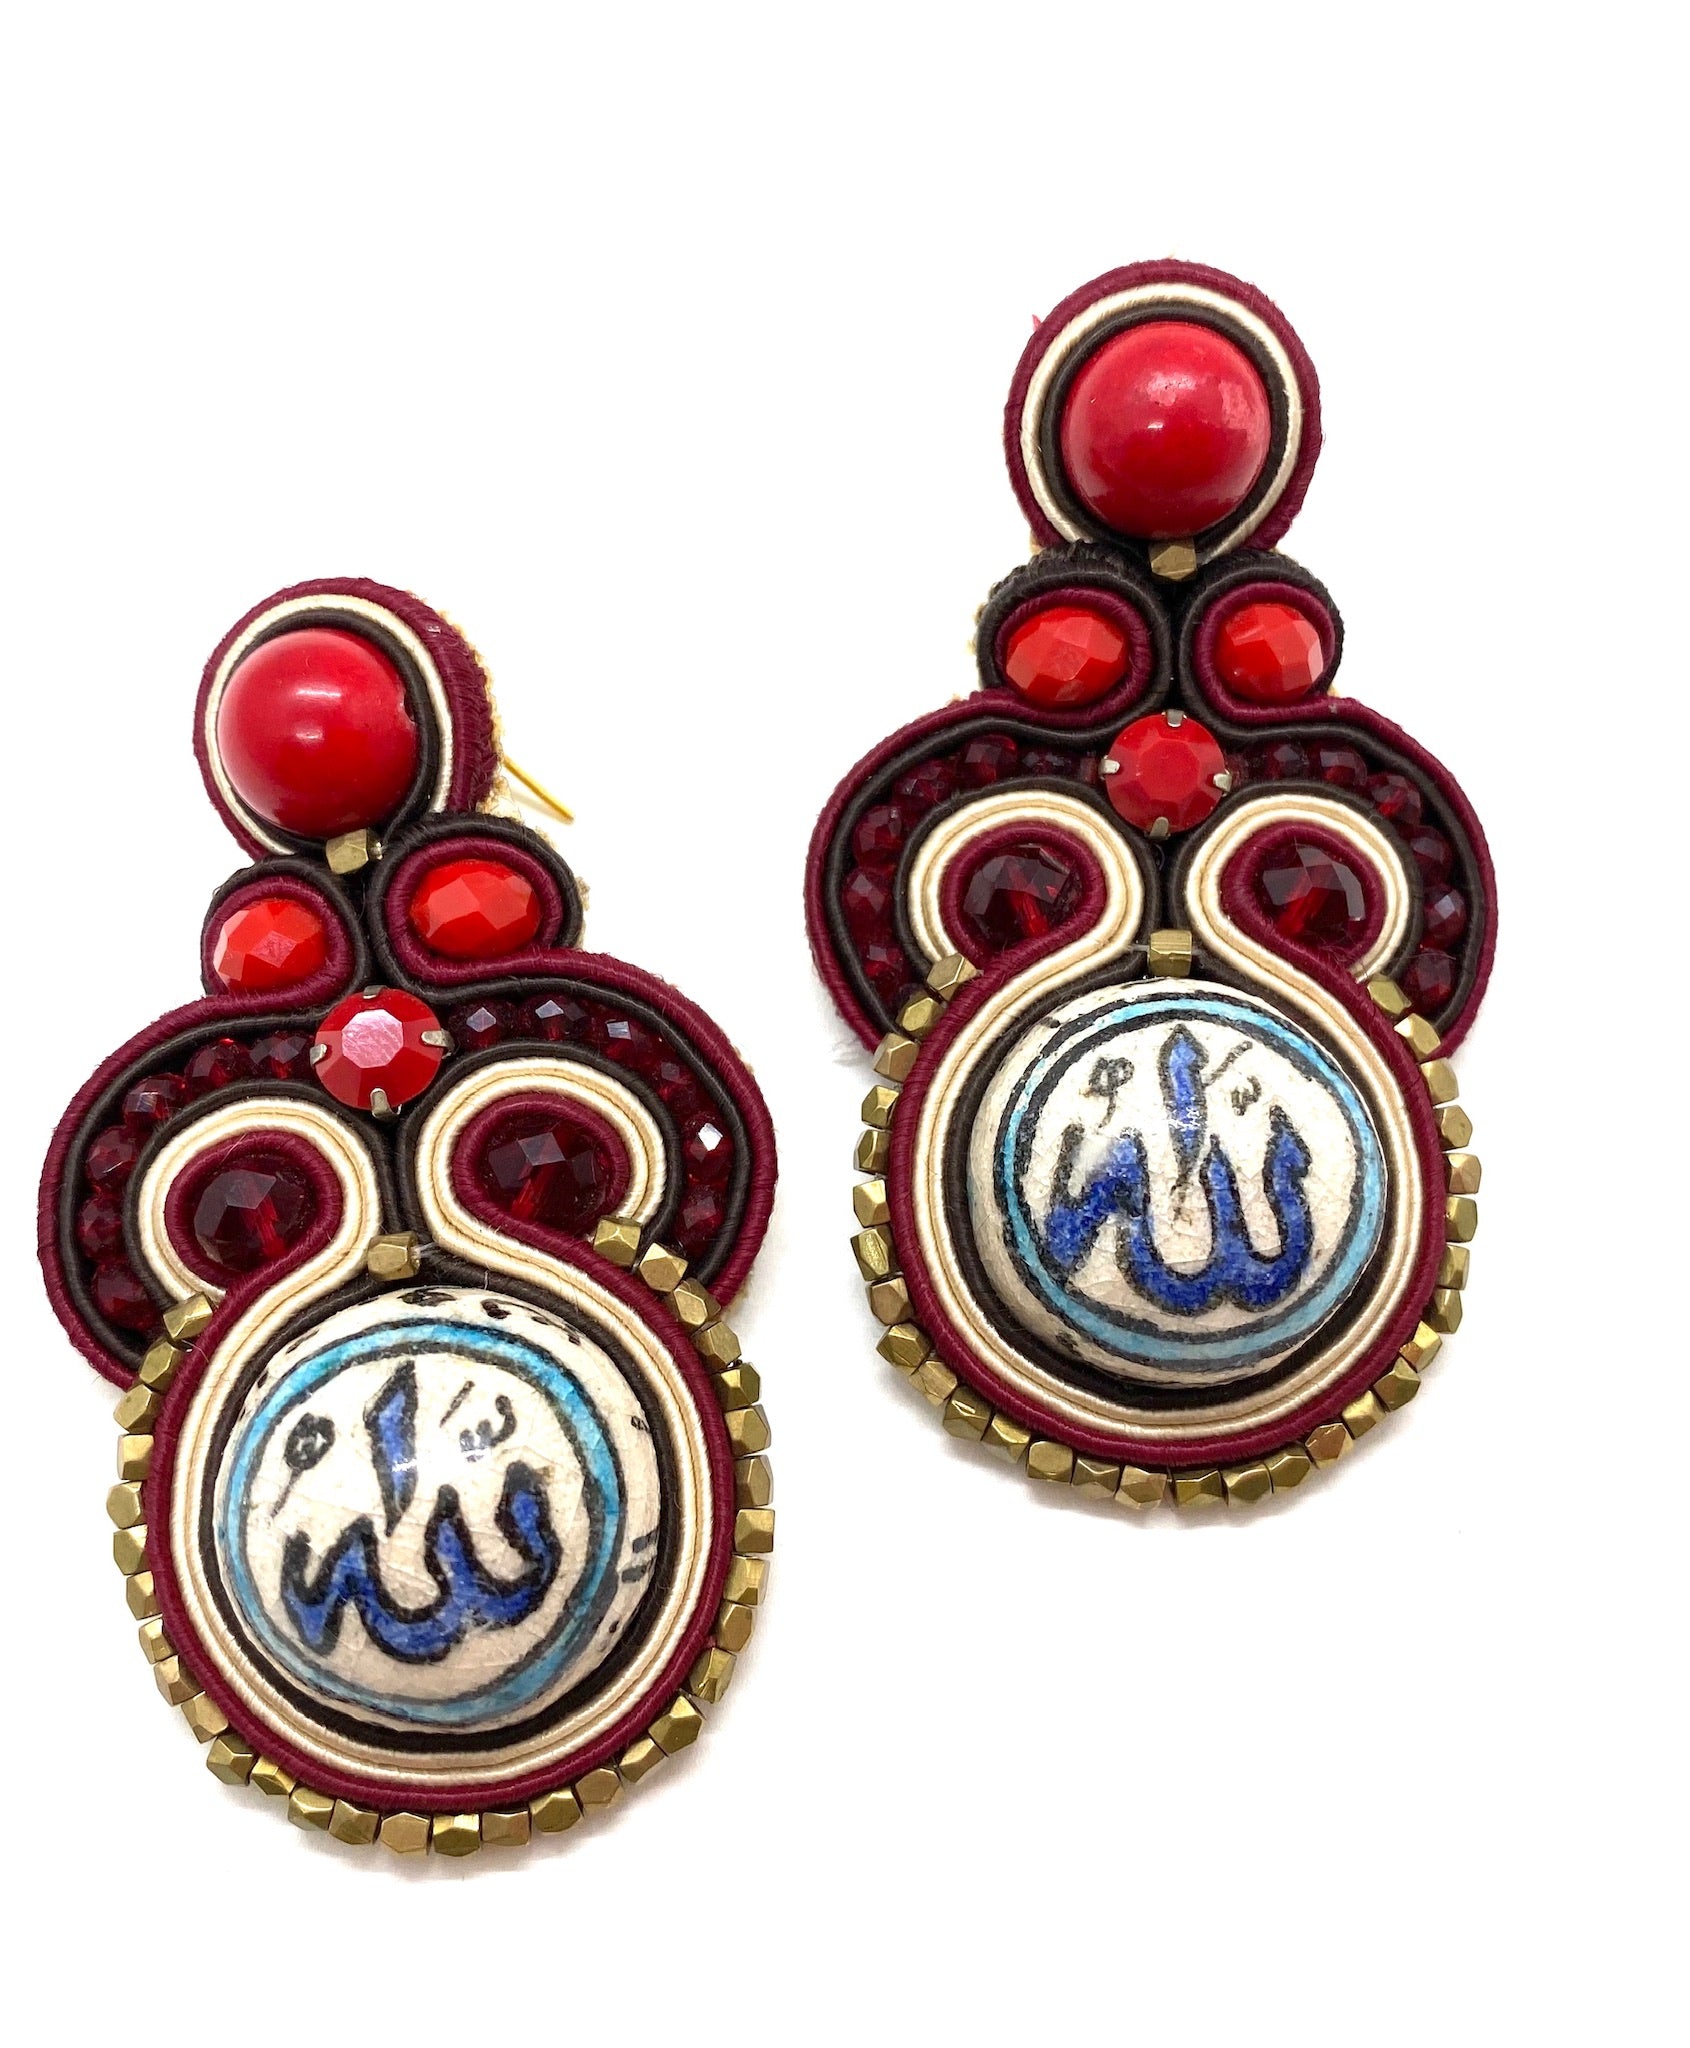 Ishani قاشاني earrings